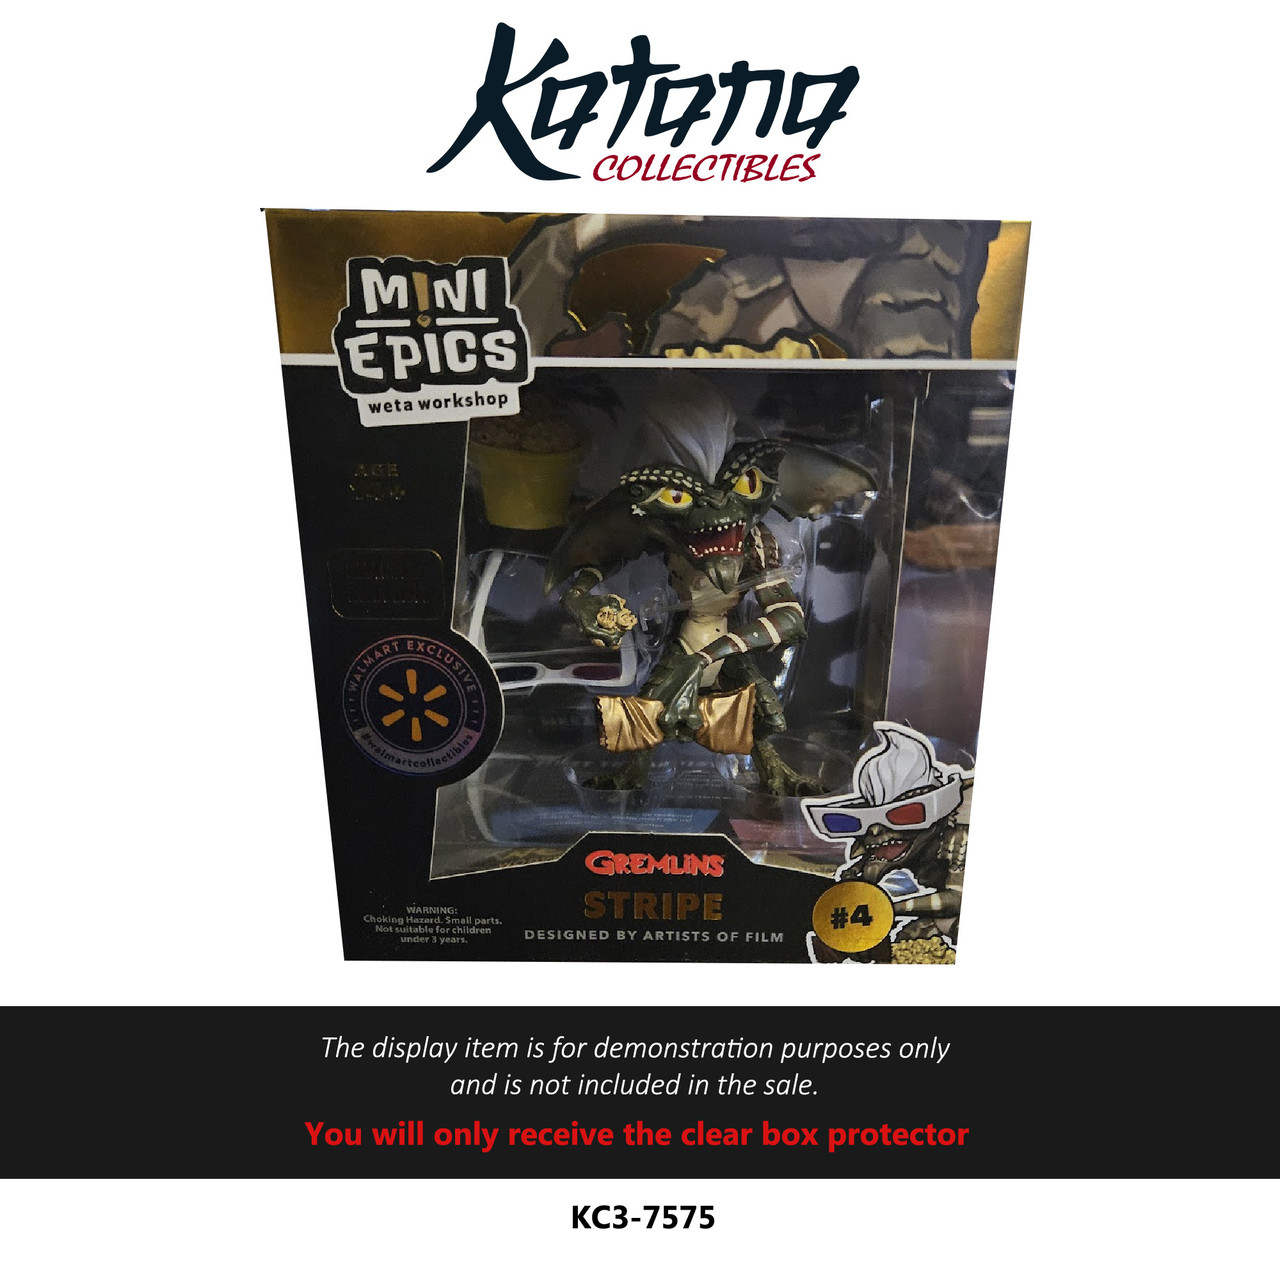 Katana Collectibles Protector For Mini Epics Gremlins Figure